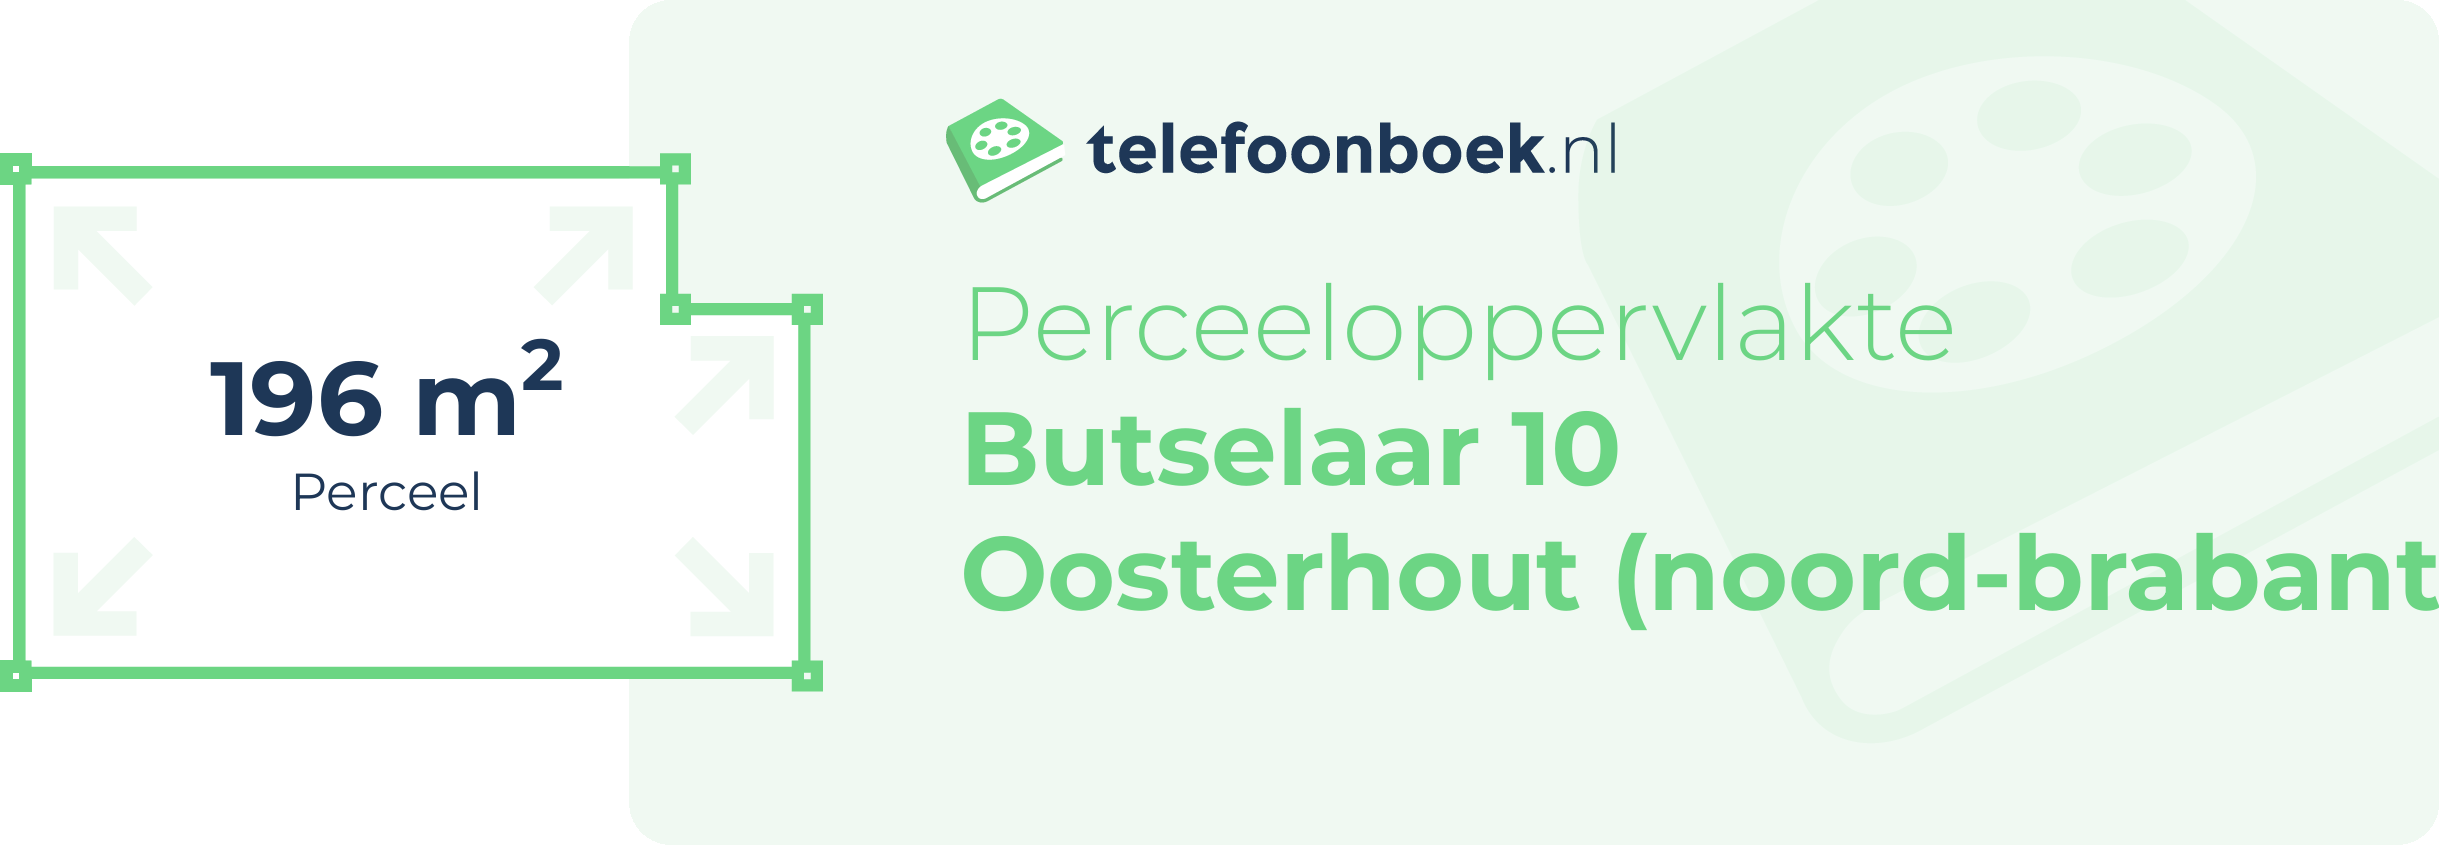 Perceeloppervlakte Butselaar 10 Oosterhout (Noord-Brabant)